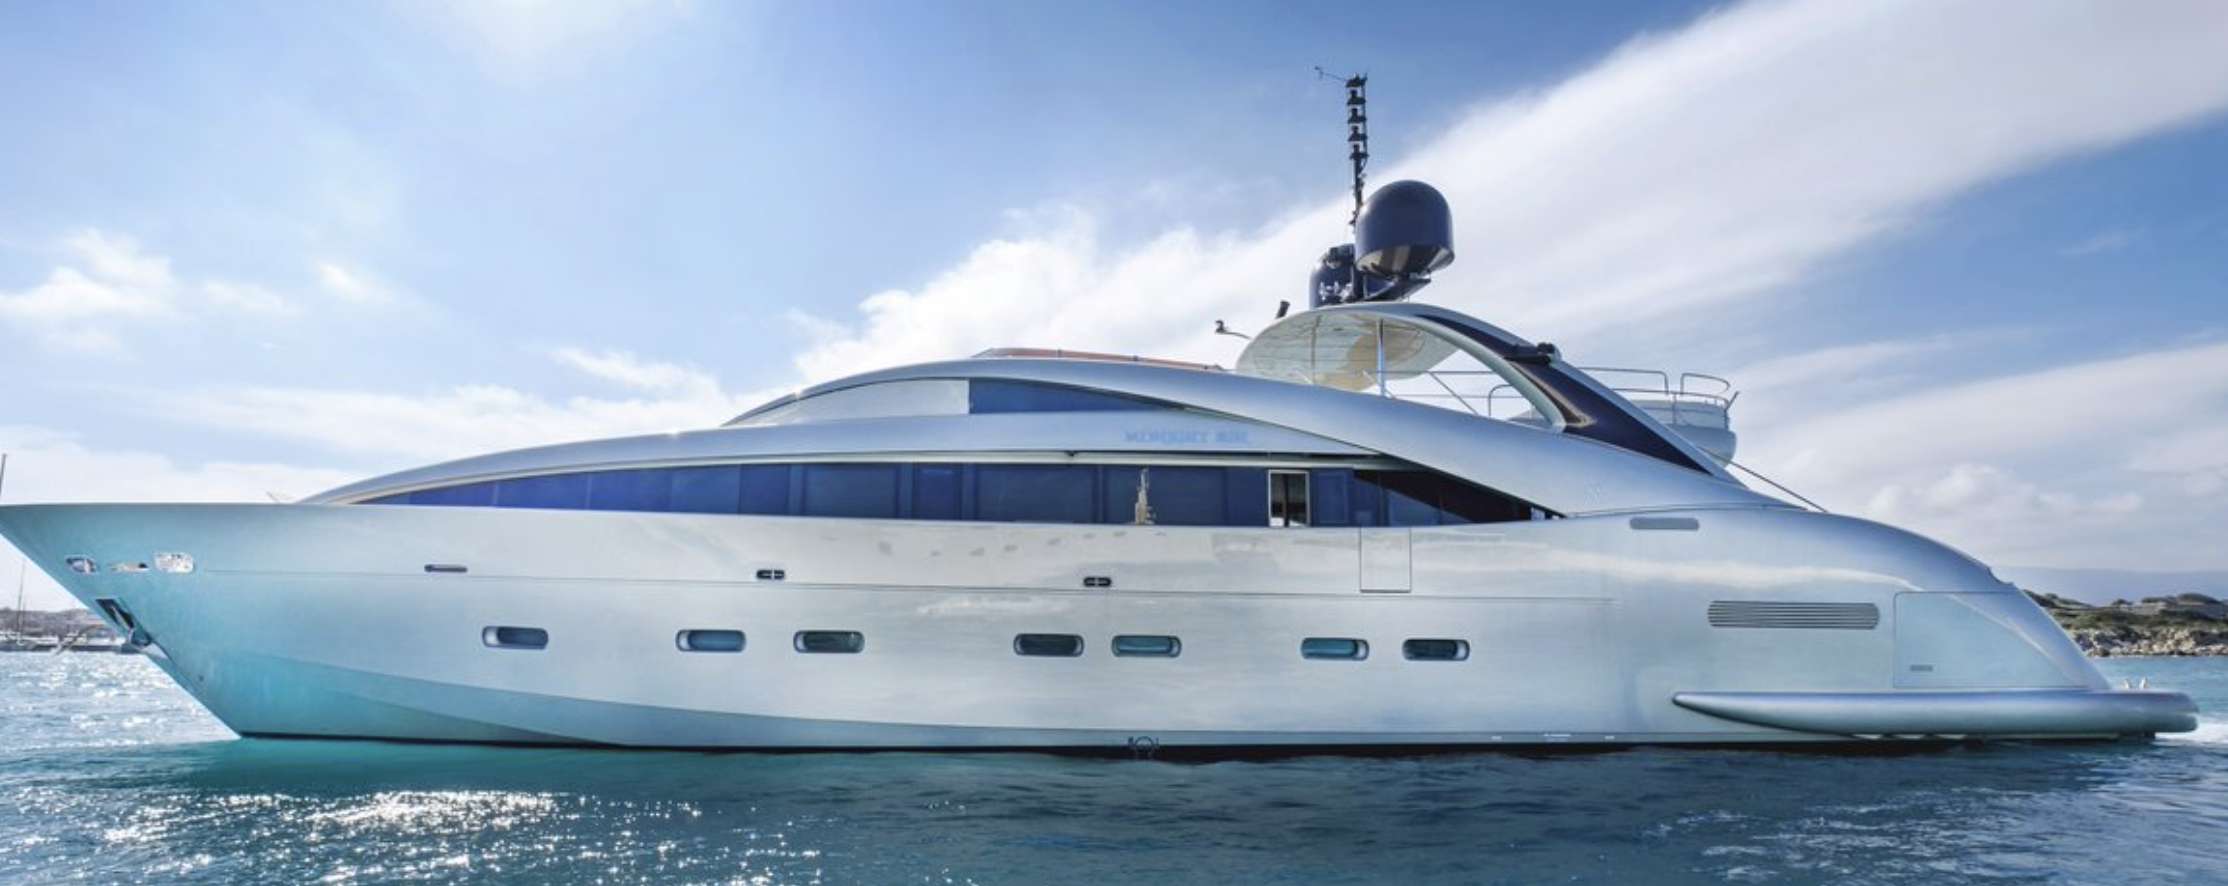 YCM 120 - Yacht Charter Denia & Boat hire in Riviera, Corsica, Sardinia, Spain, Balearics, Caribbean 4